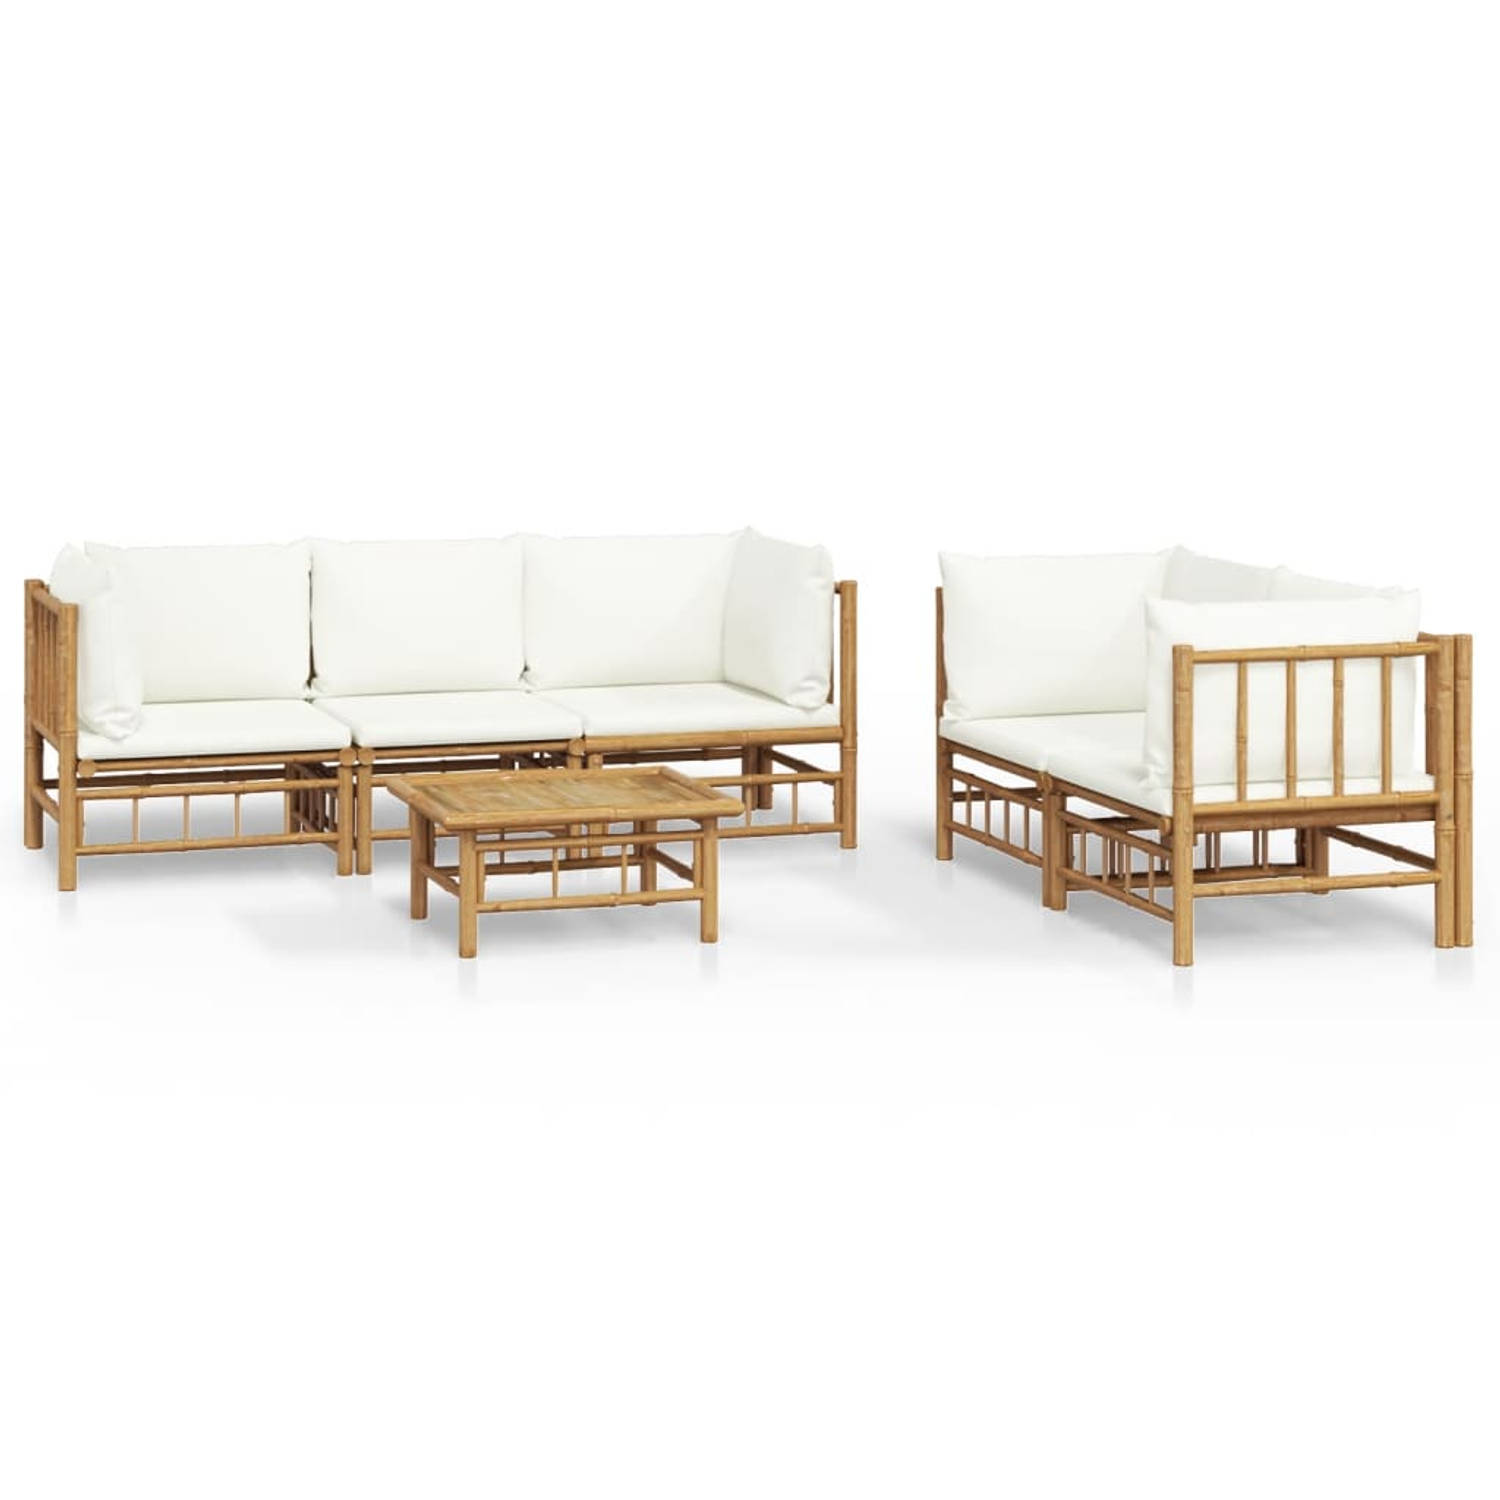 The Living Store Bamboe Lounge Set - 55 x 69 x 65 cm - Duurzaam materiaal - Comfortabele zitervaring - Praktische tafel - Modulair ontwerp